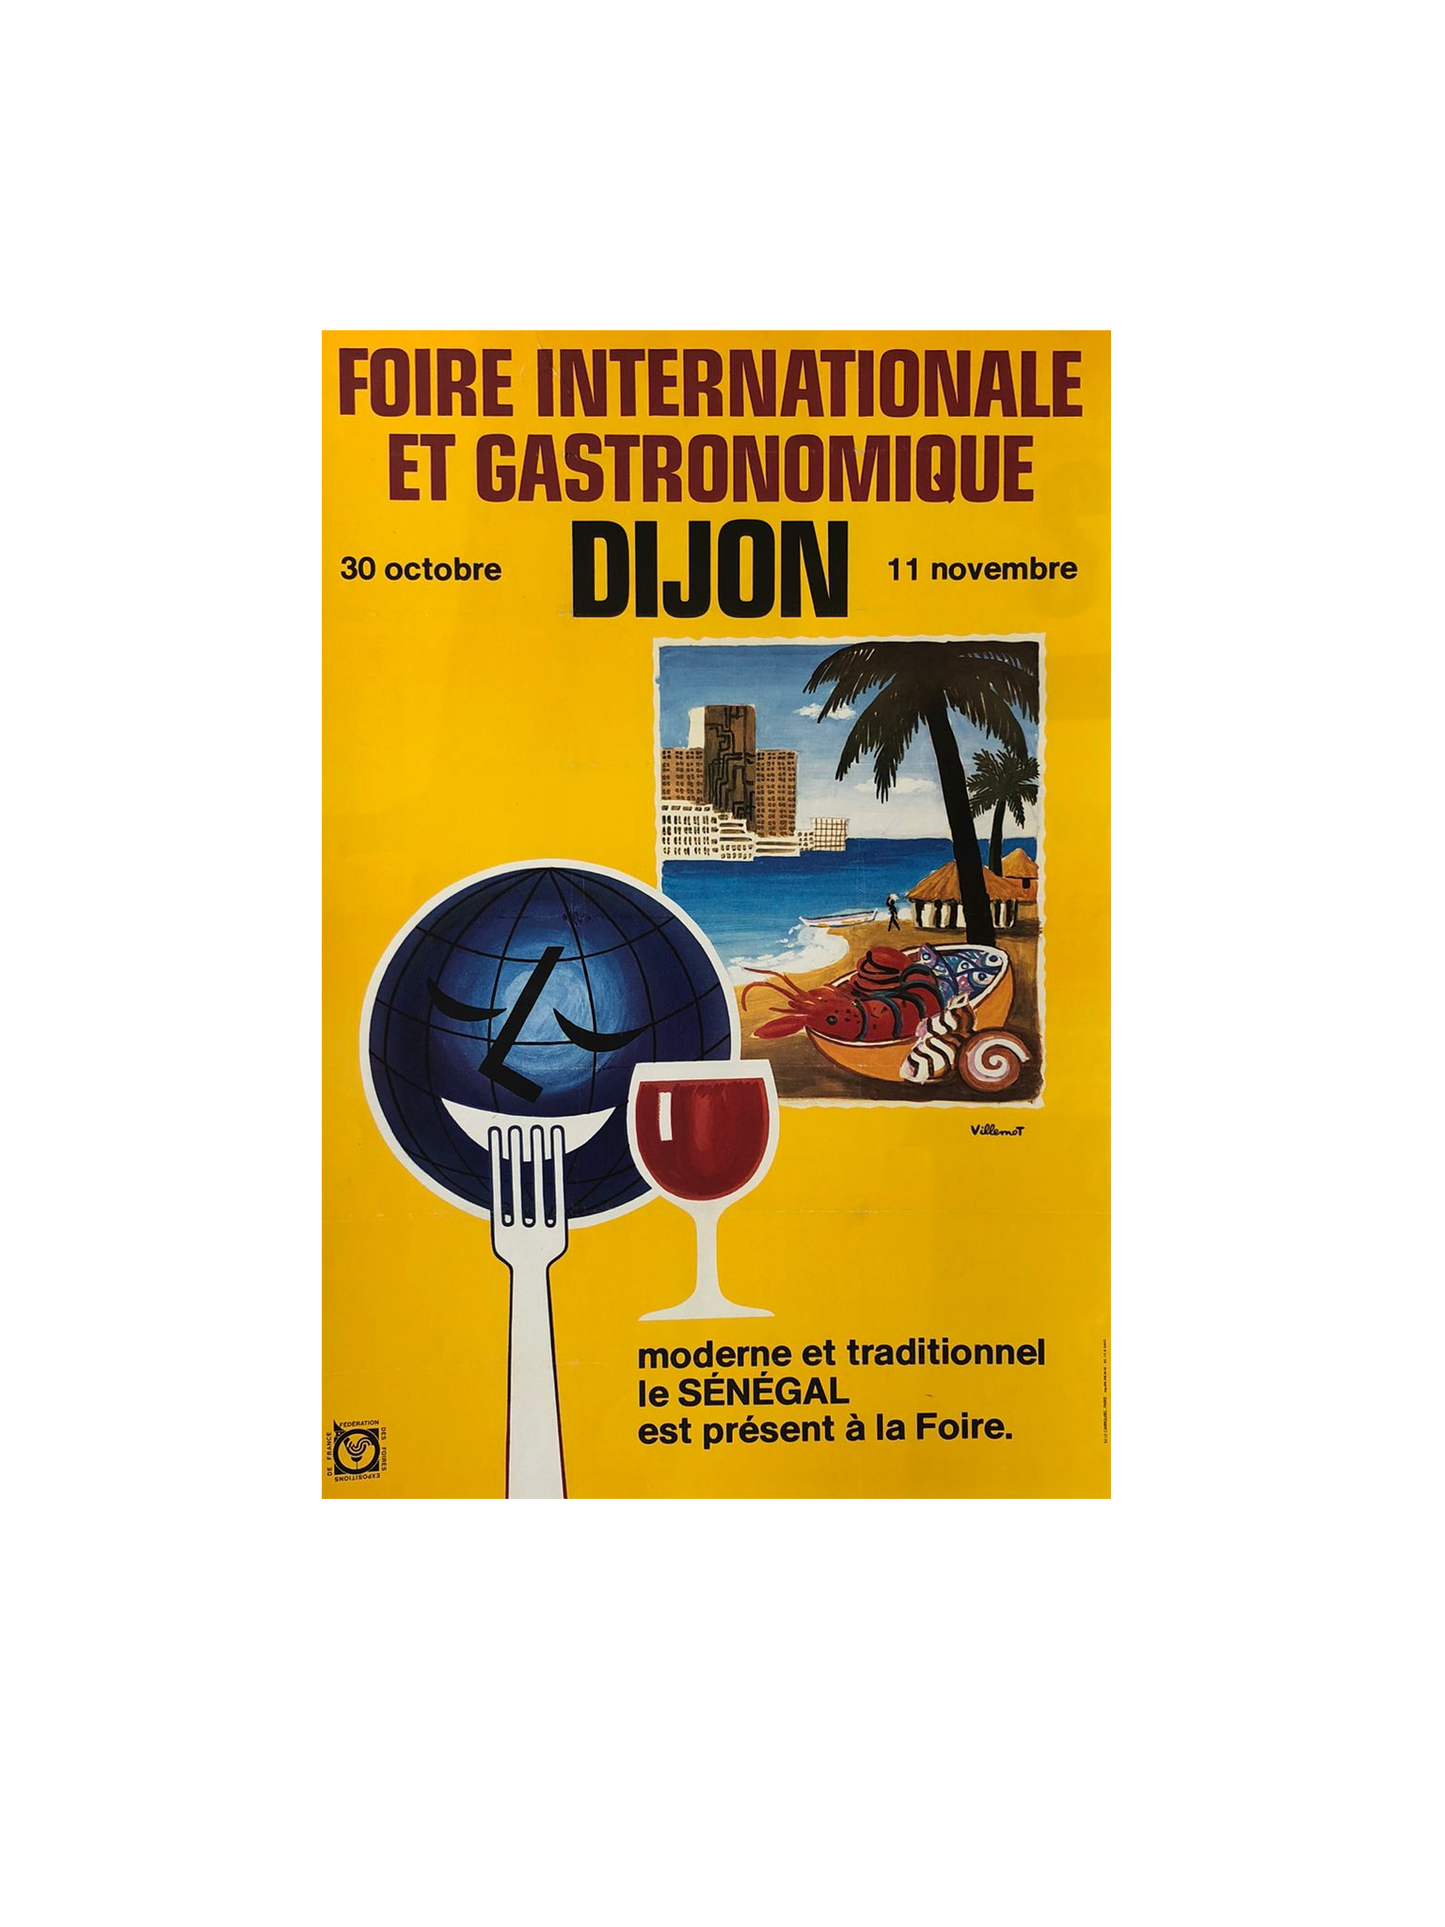 Dijon International Food Festival